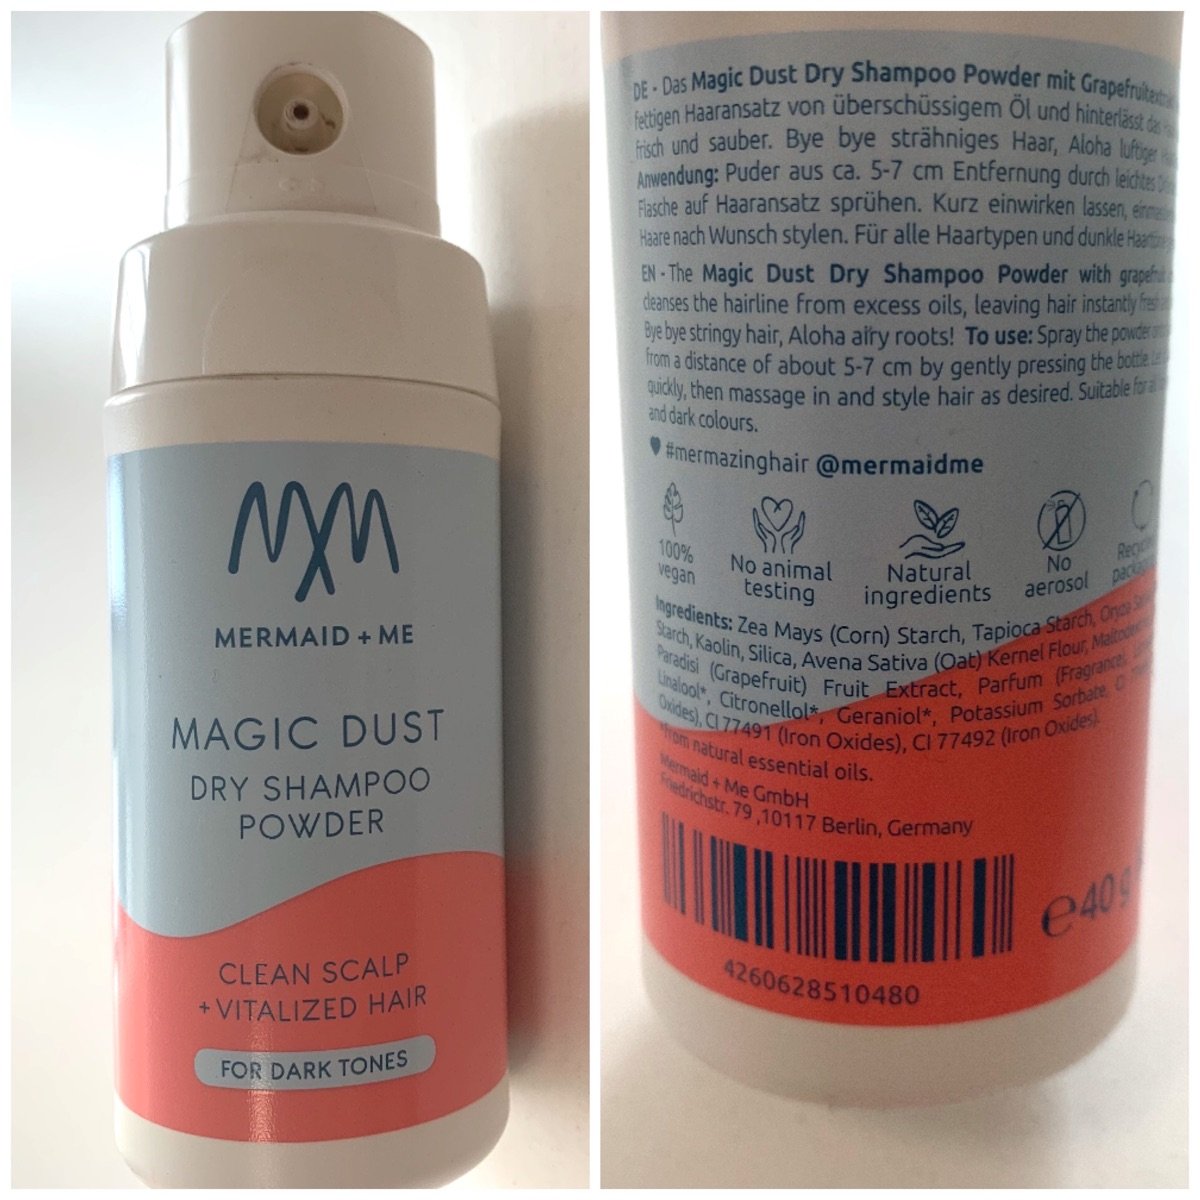 Mermaid + Me Magic dust, dry shampoo powder for dark tones Review | abillion